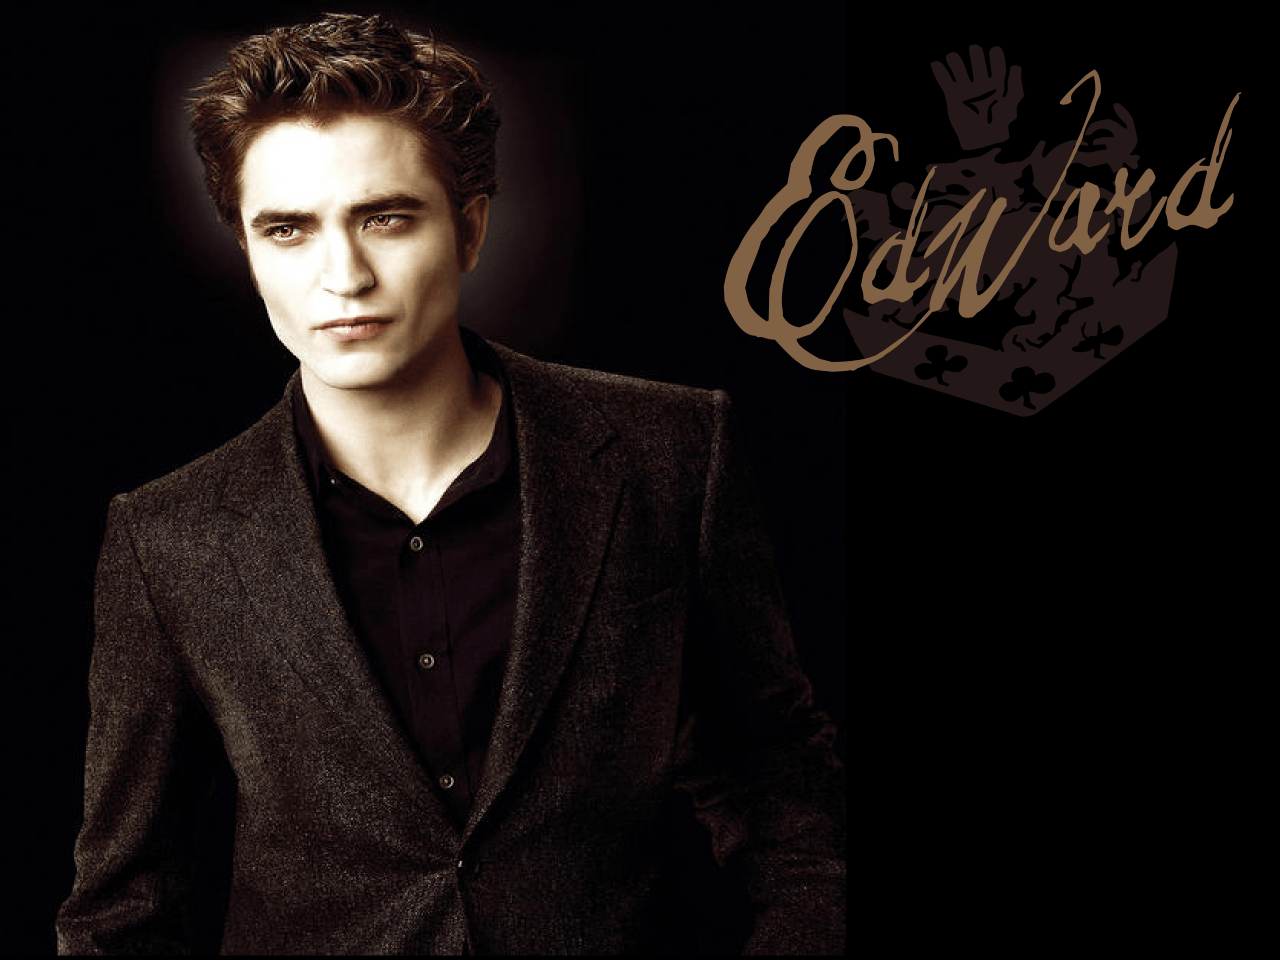 Fondos de pantalla de Edward Cullen. Wallpaper de Edward Cullen